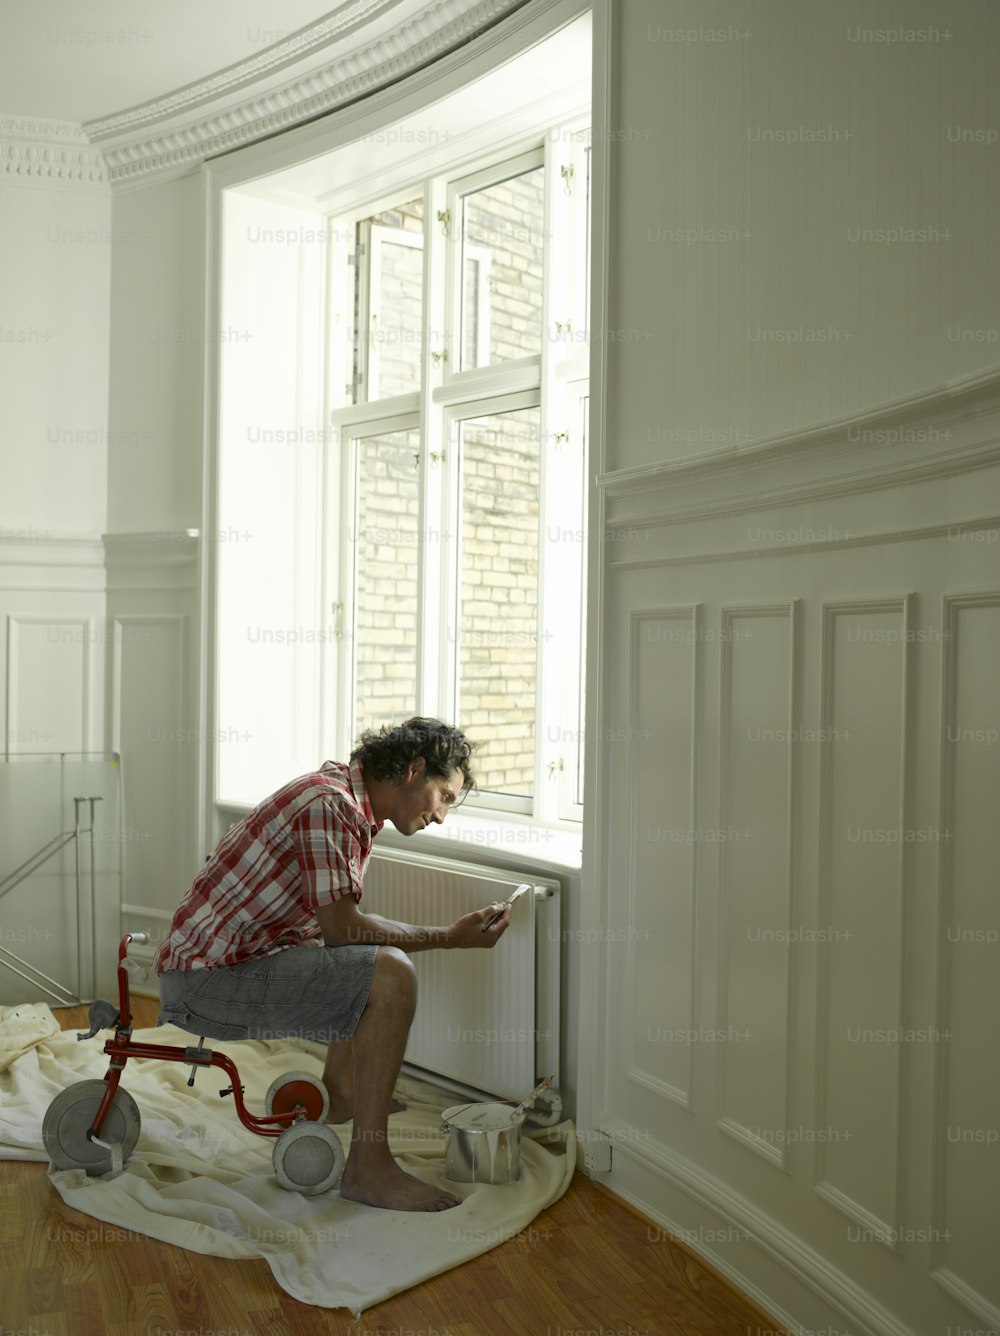 Un uomo seduto su una sedia davanti a una finestra